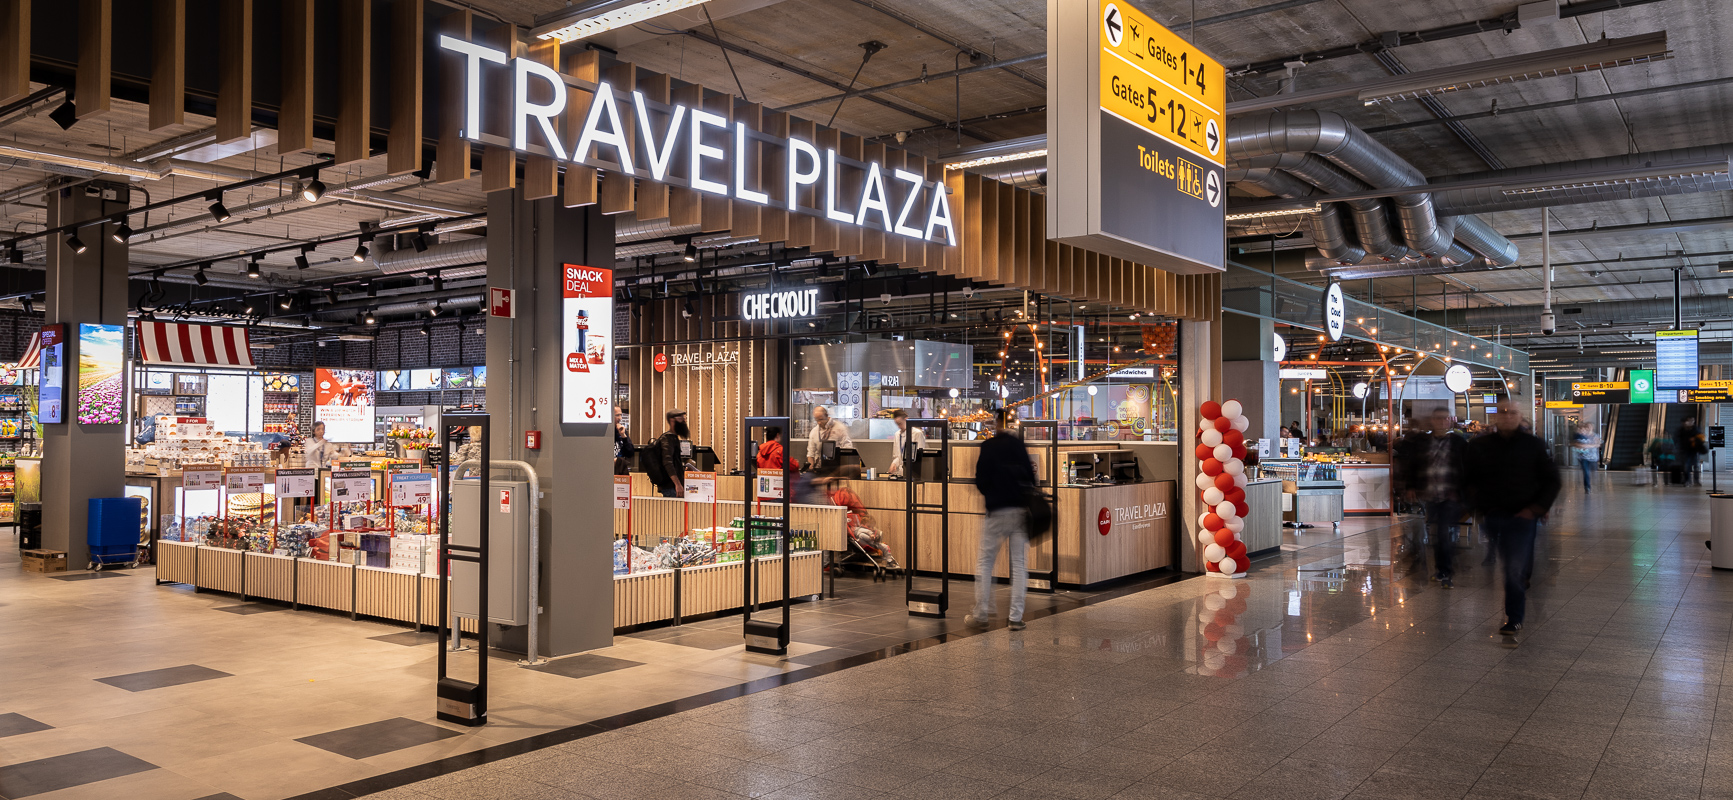 Travel Luxury en Travel Plaza | Eindhoven (NL) - 